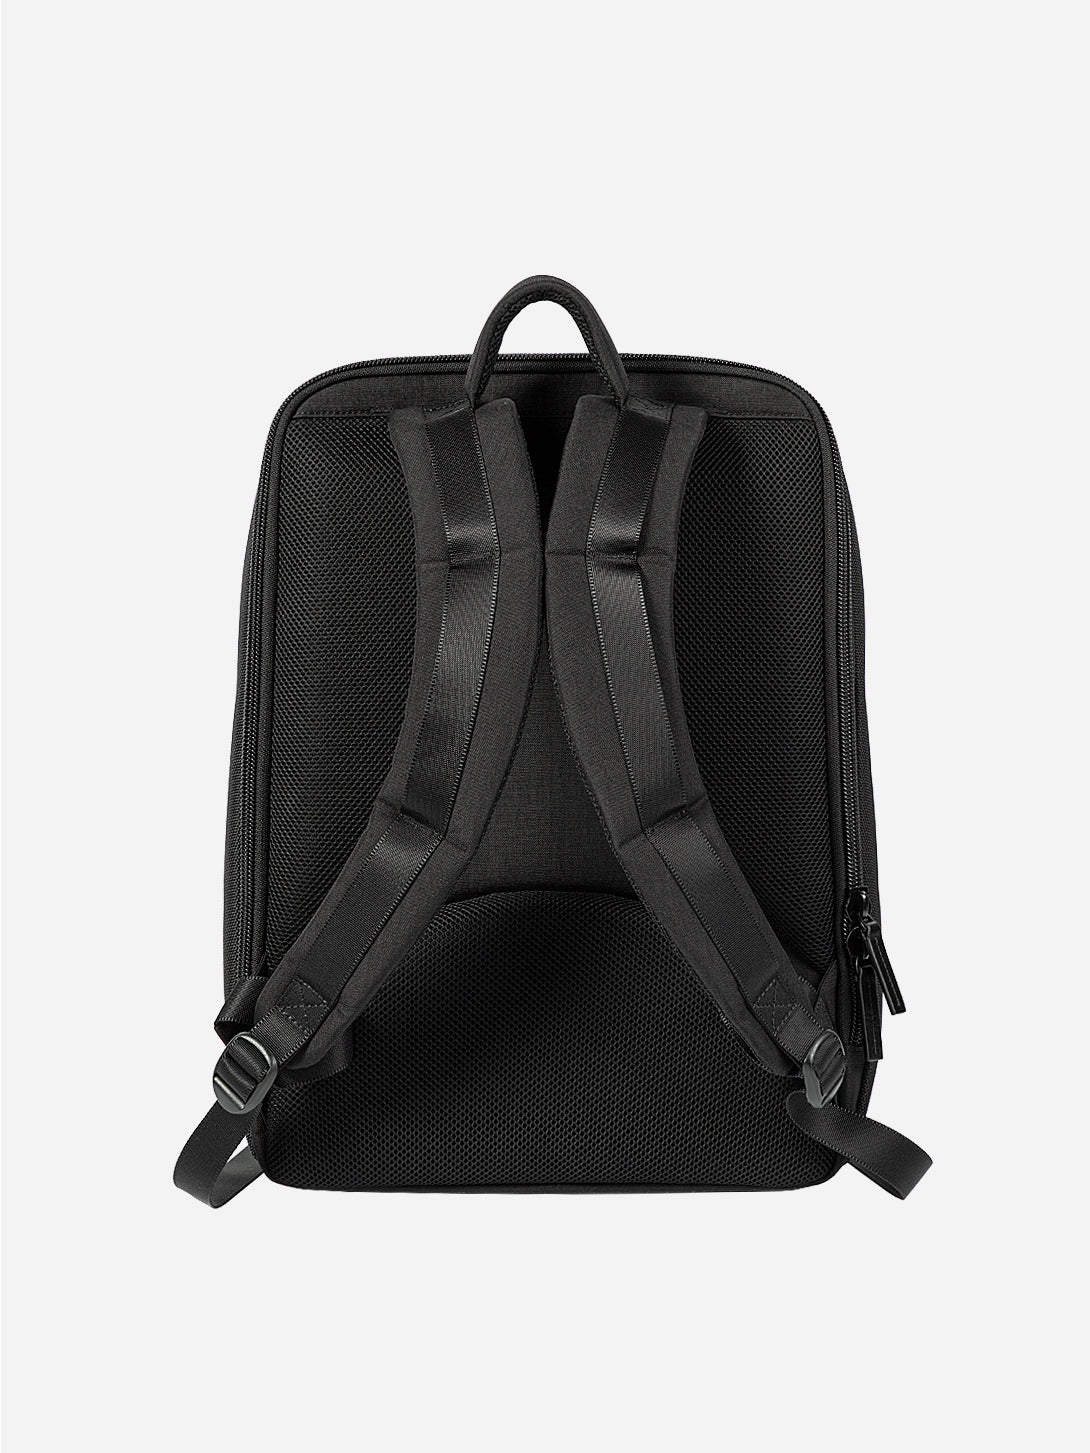 Black All-Things Backpack ONS Utility Storage Sleek Contemporary Backpack